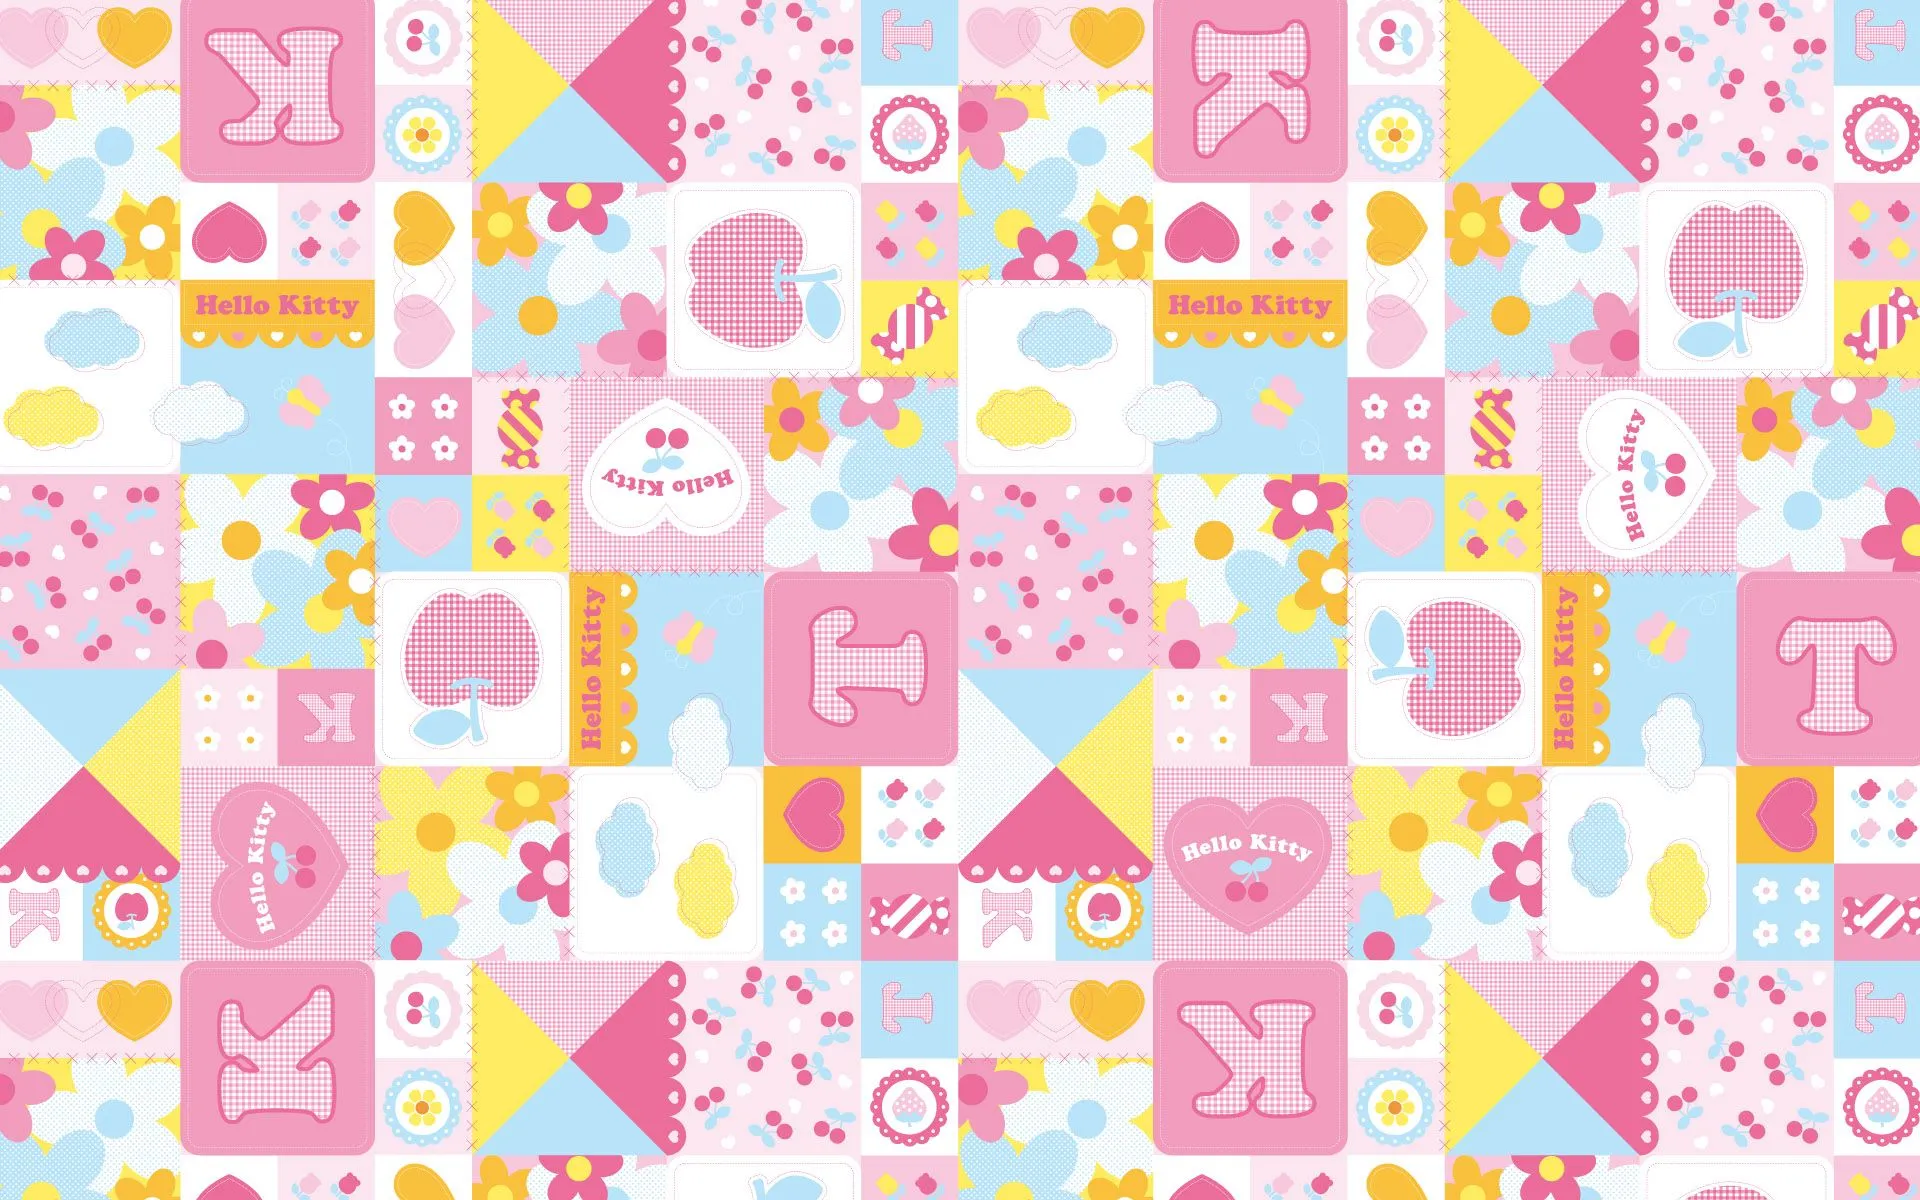 Hello Kitty Widescreen Wallpaper Wallpapers - HD Wallpapers 86274